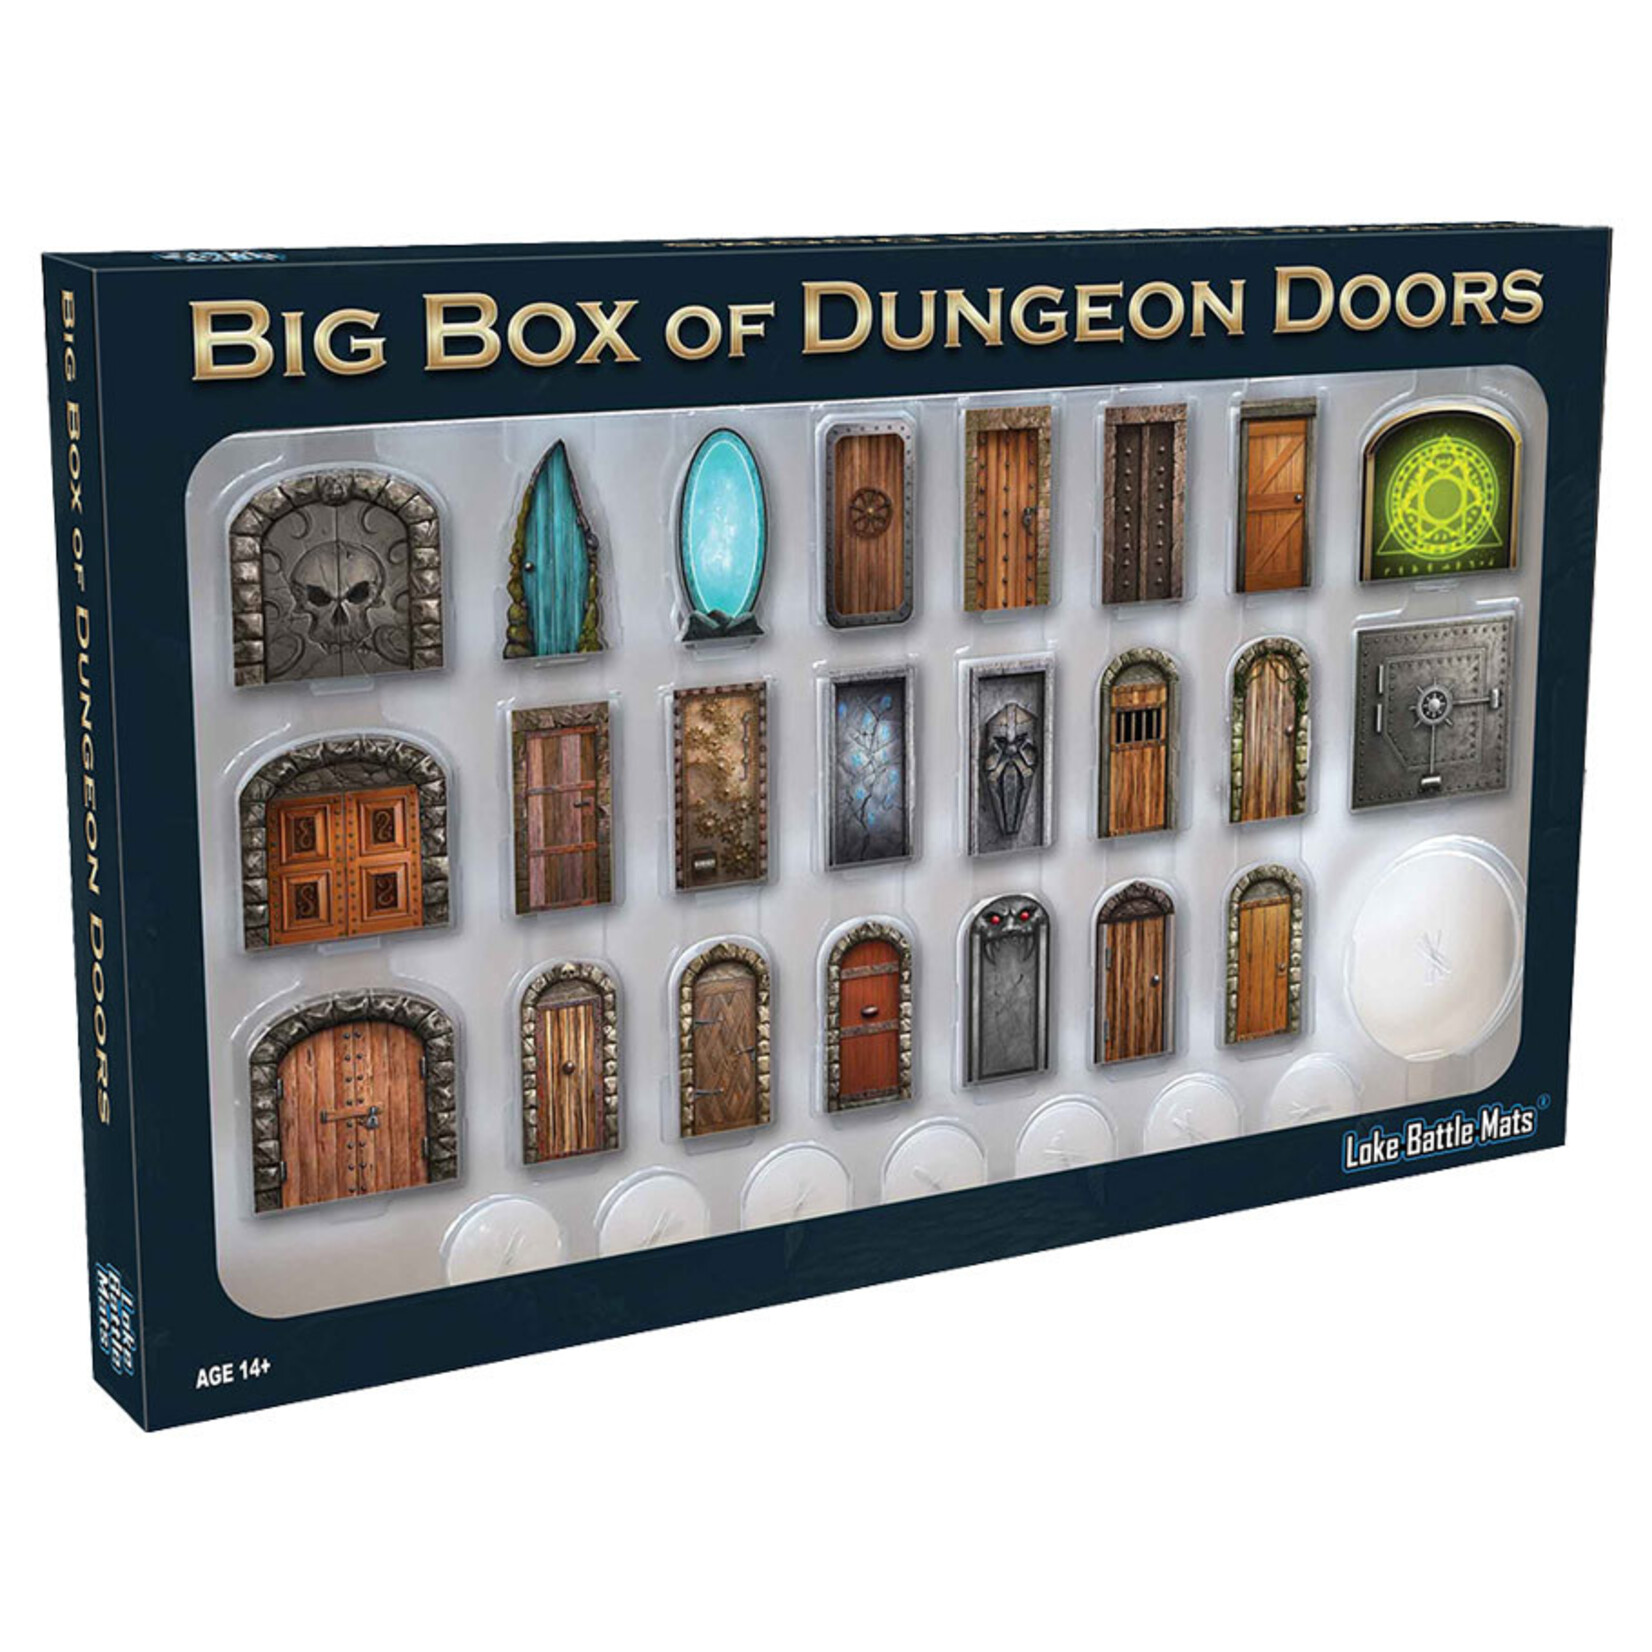 Loke Battle Mats Big Box of Dungeon Doors